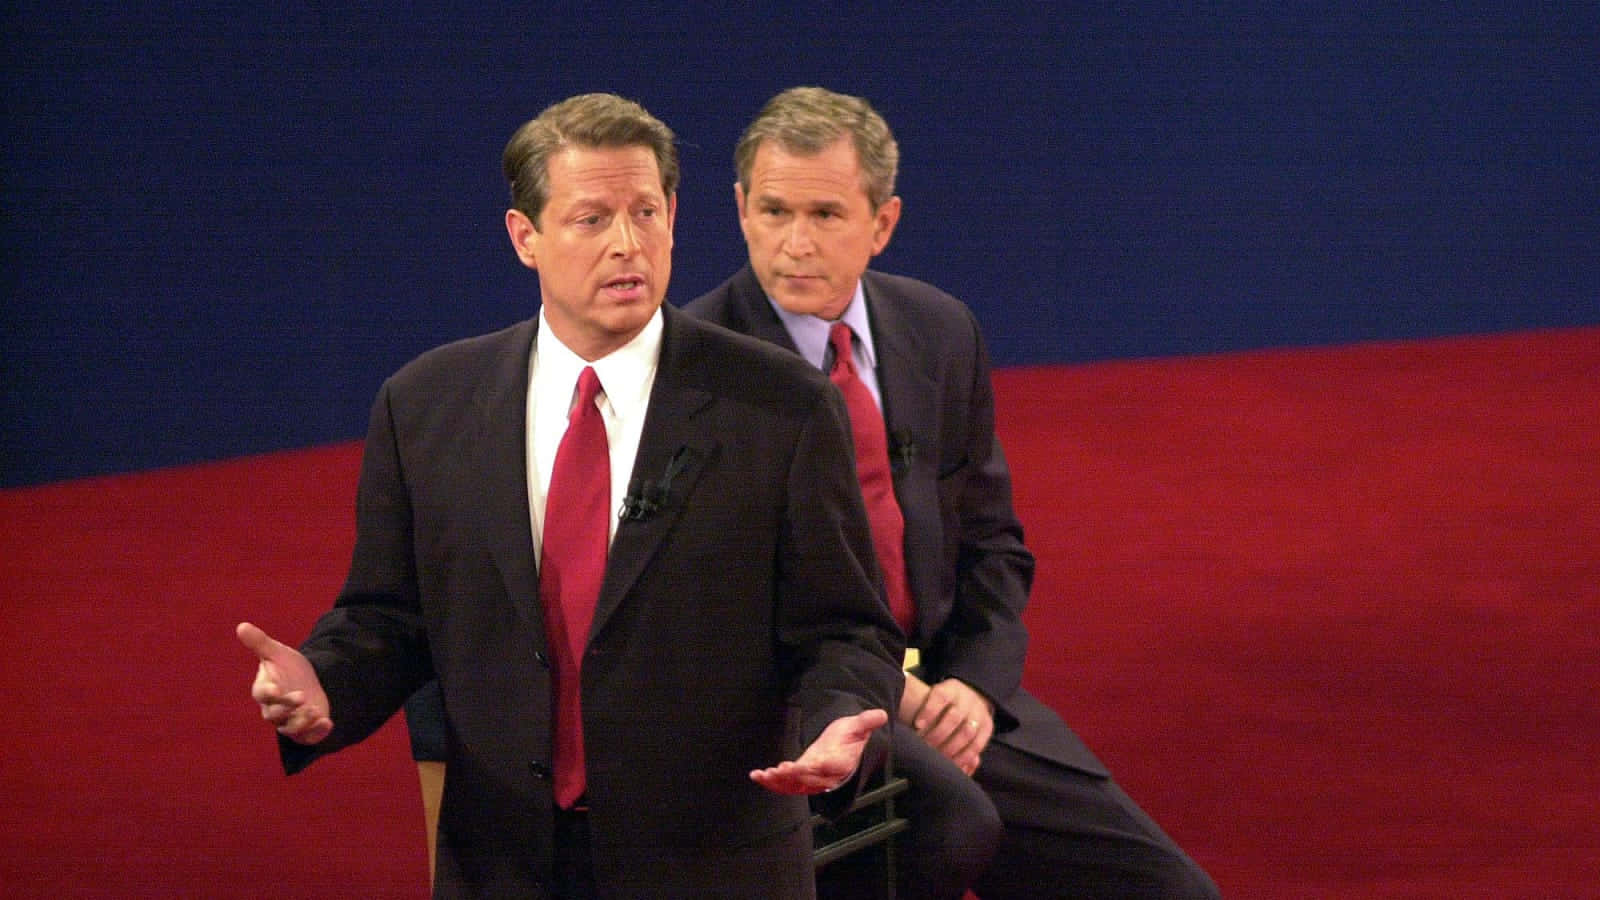 Al Gore Articulating His Views In A Debate With George Bush Wallpaper